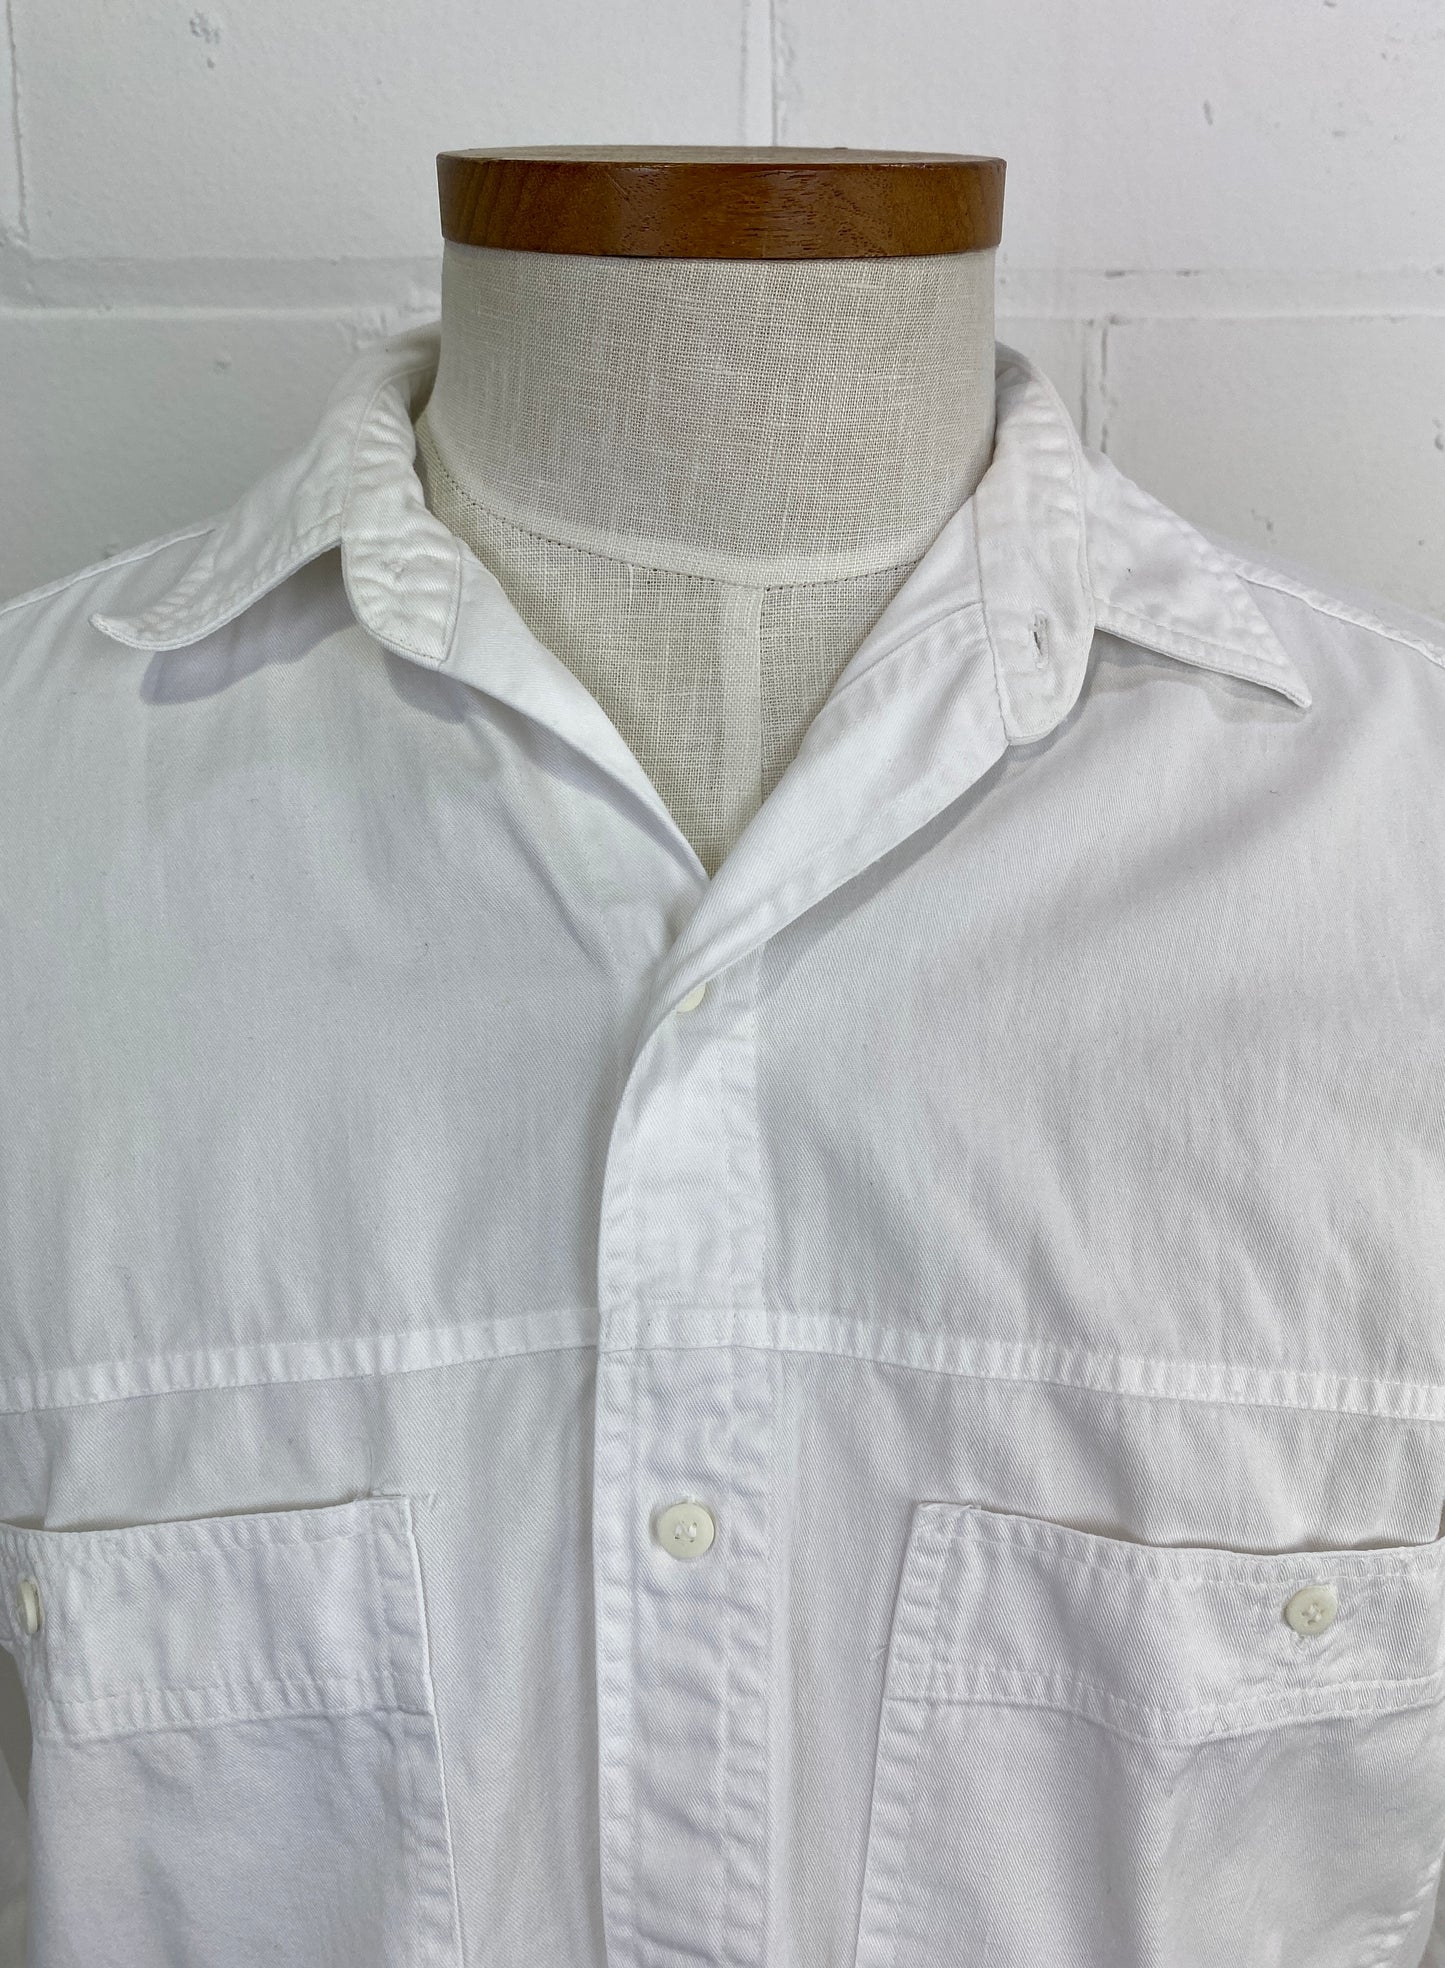 Vintage 80s Men's White Button-Up Shirt, Large